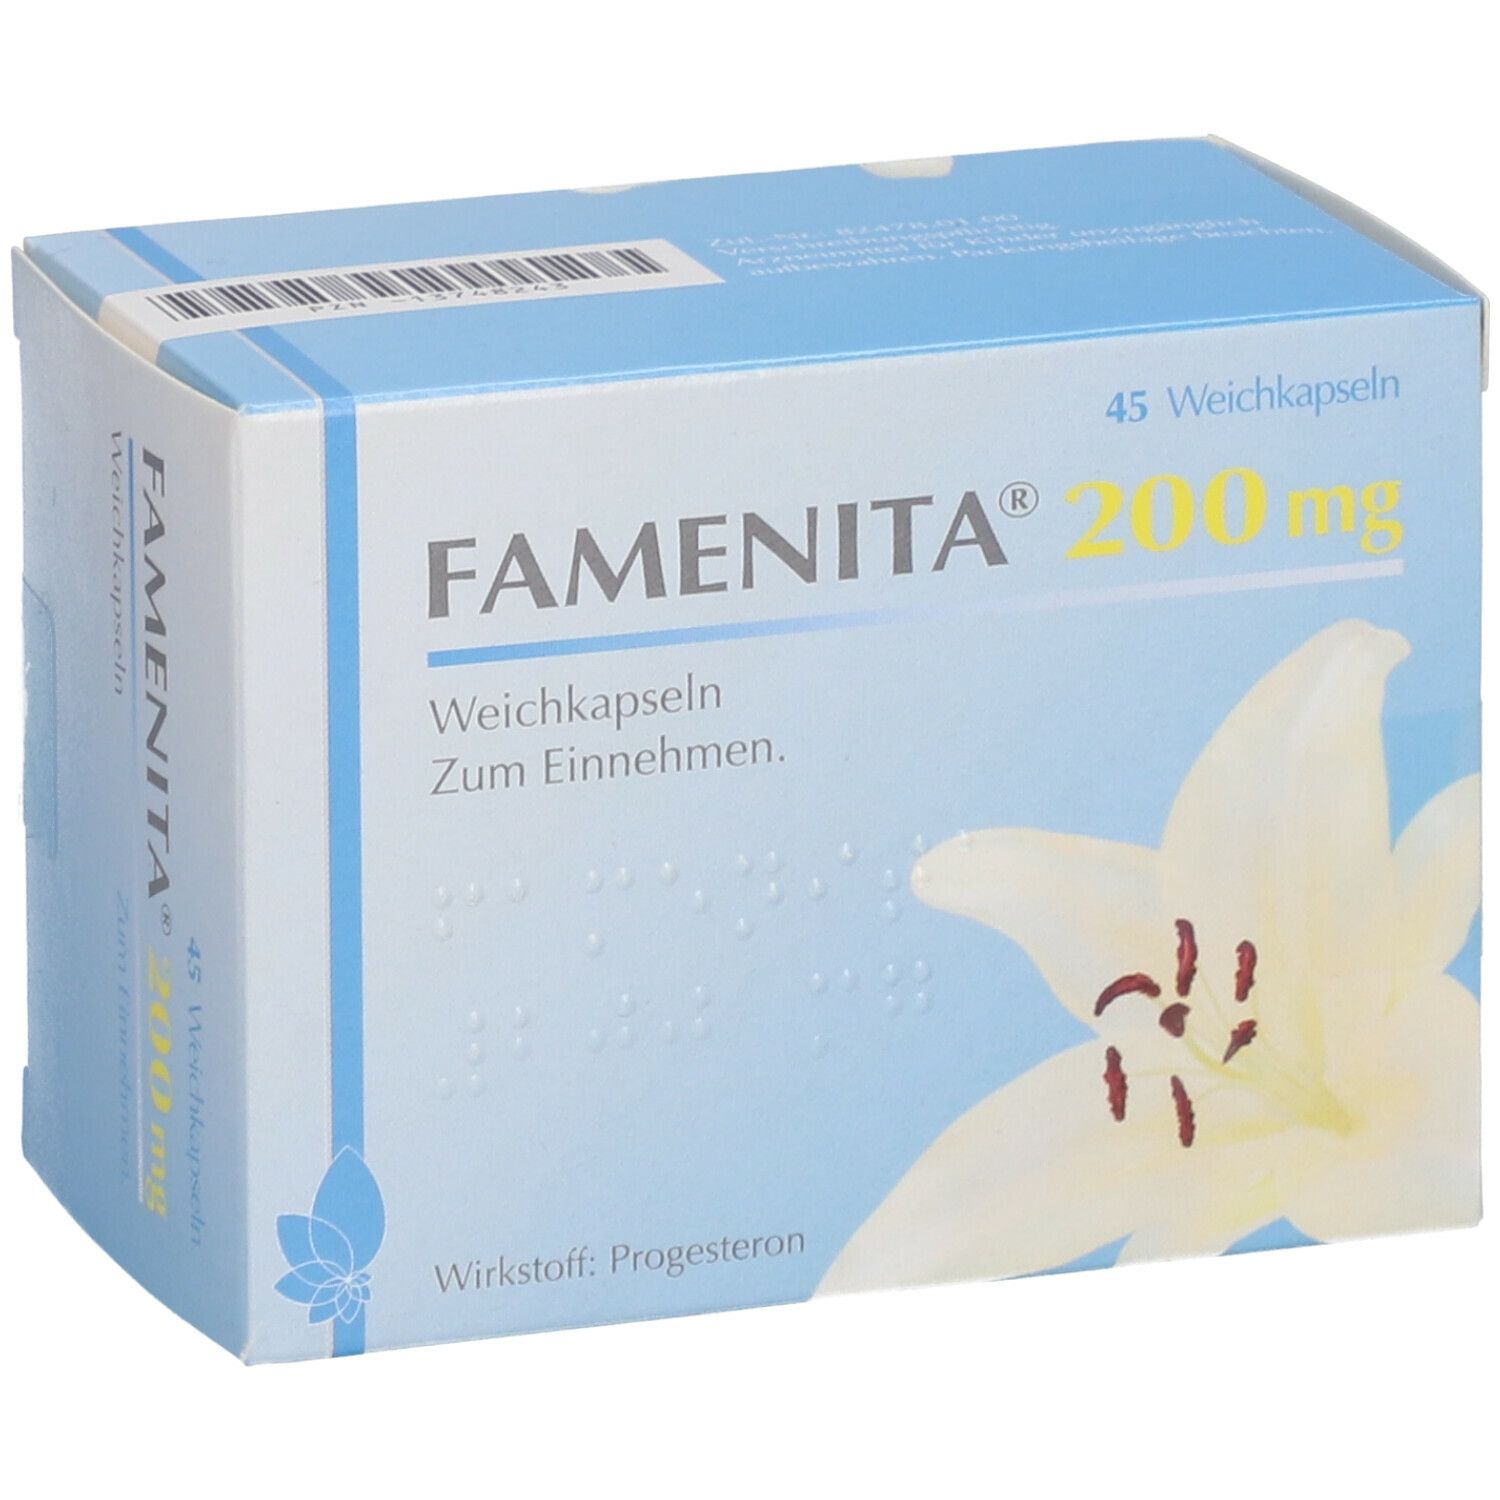 FAMENITA® 200 mg